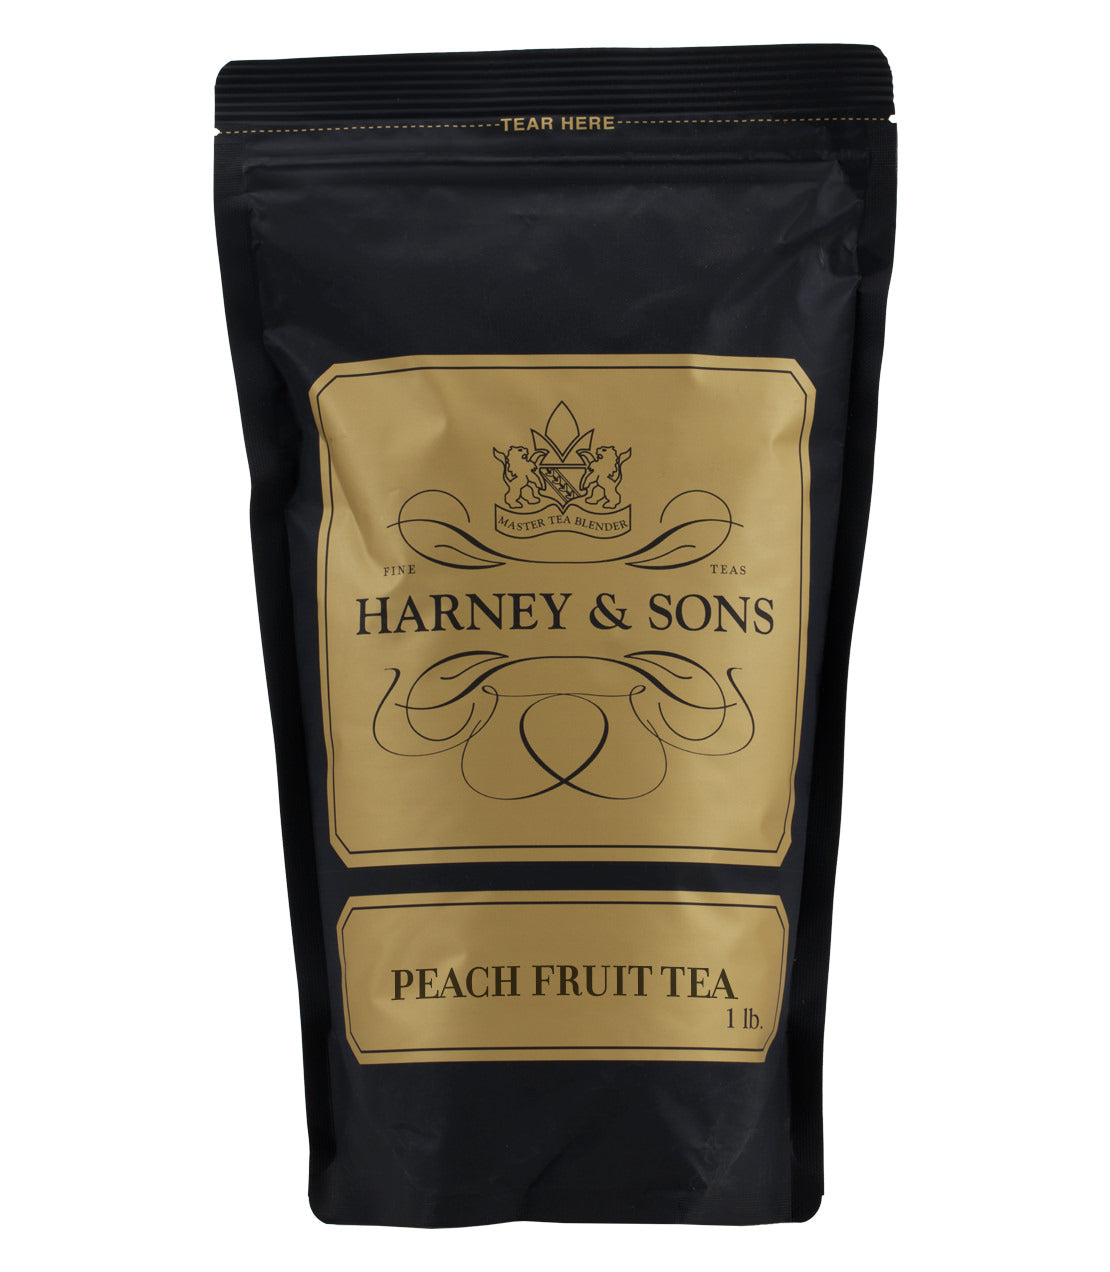 Peach Fruit Tea - Loose 1 lb. Bag - Harney & Sons Fine Teas